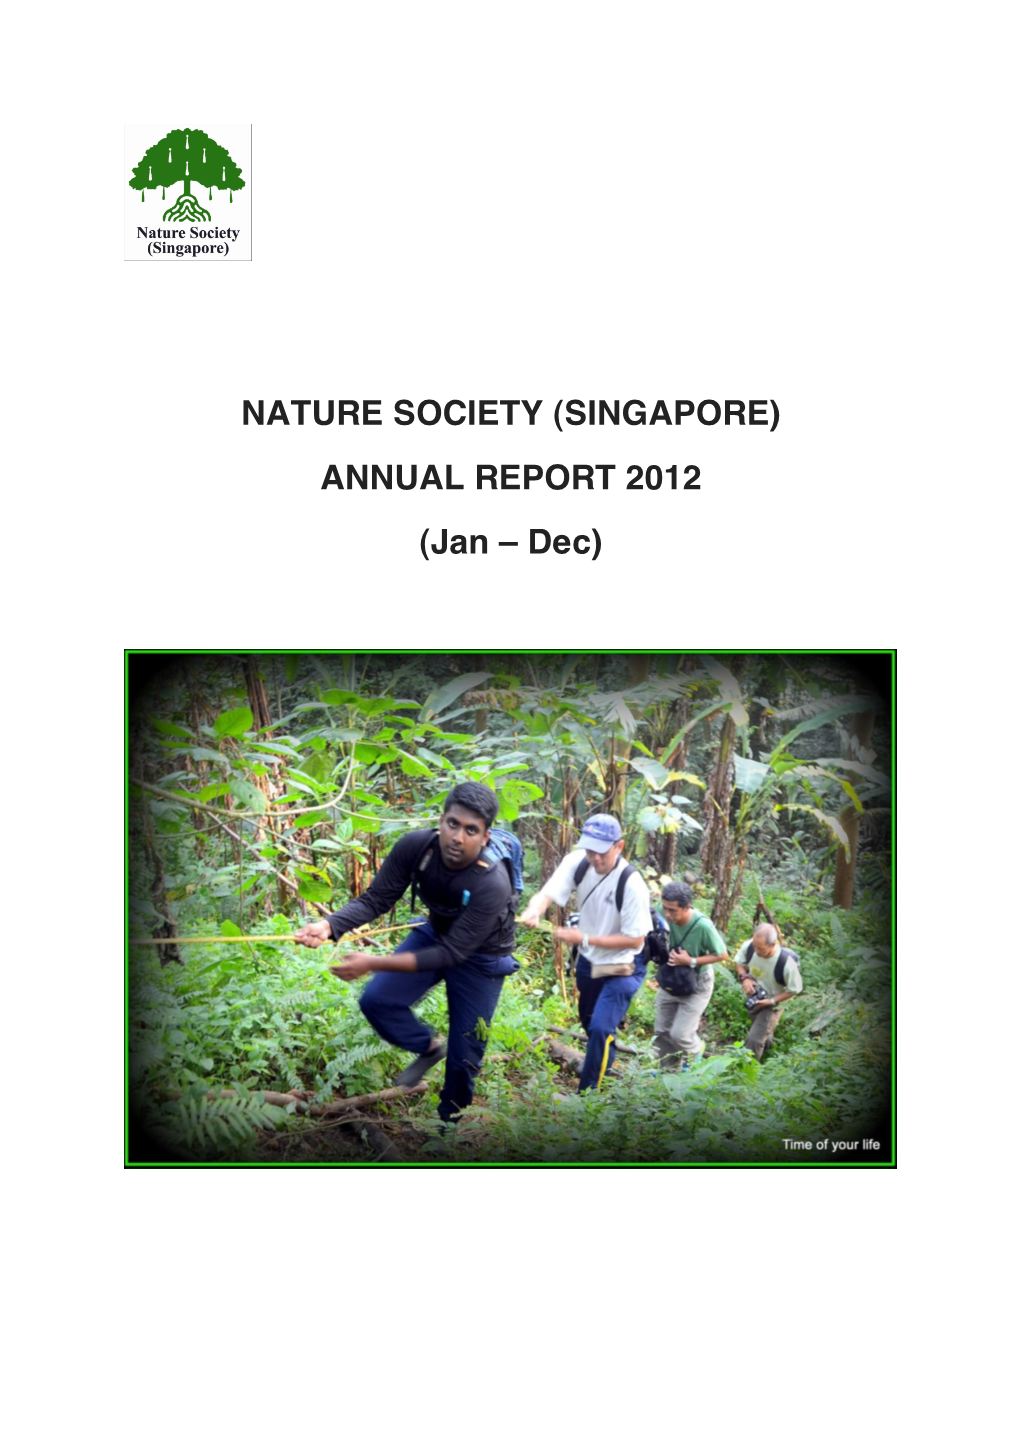 NATURE SOCIETY (SINGAPORE) ANNUAL REPORT 2012 (Jan – Dec)